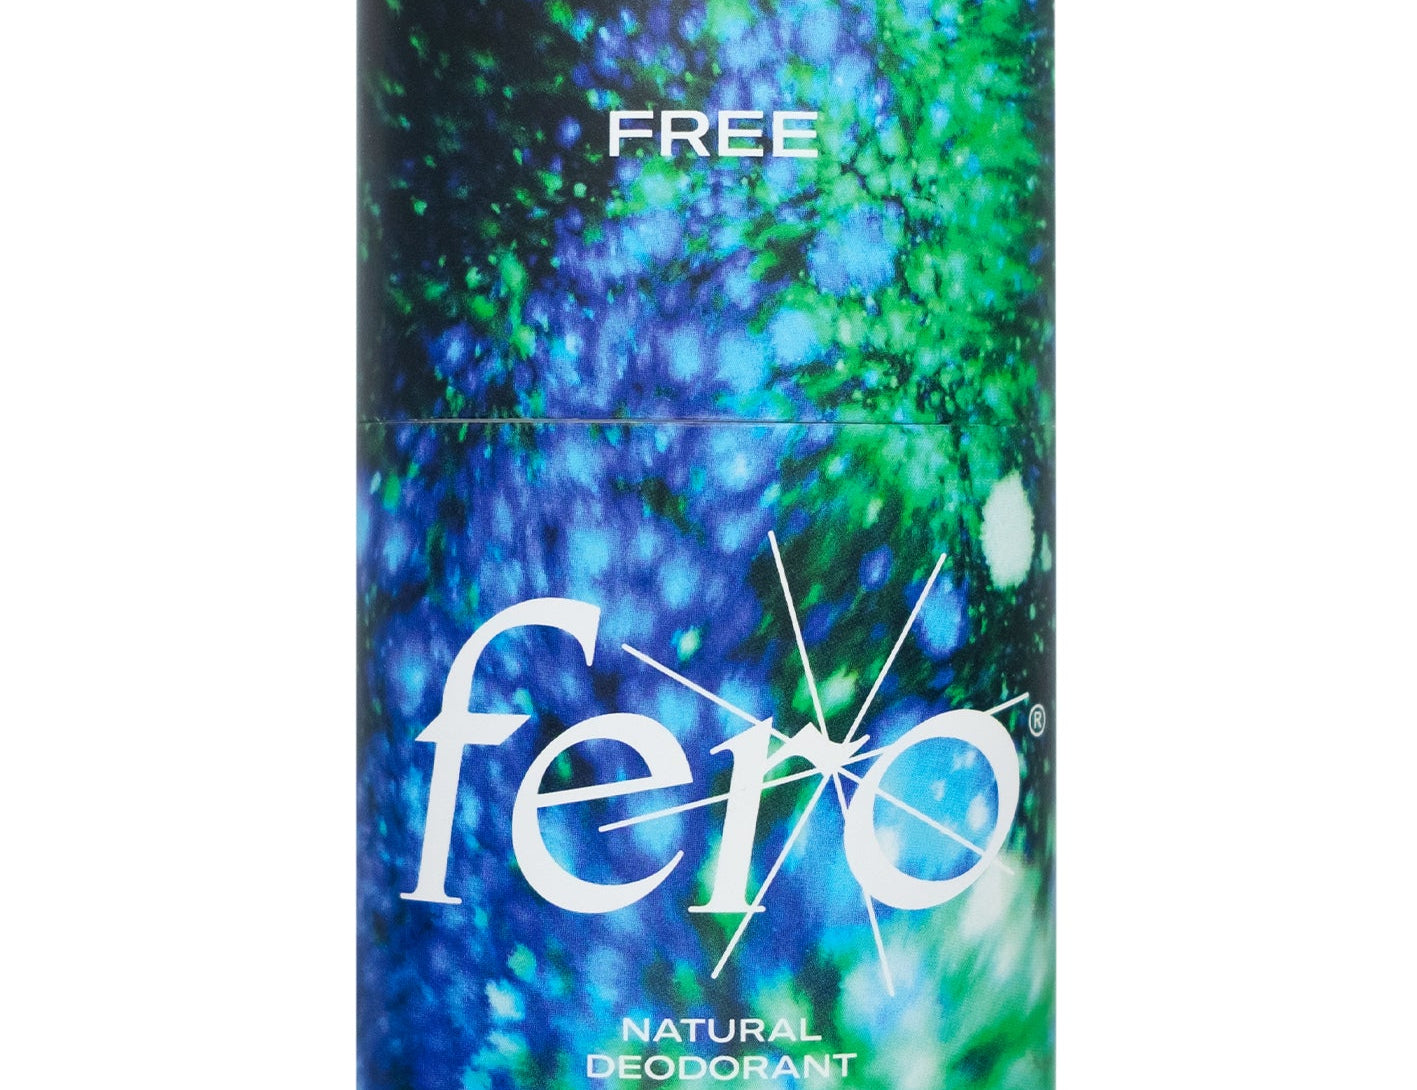 FREE - Unscented-Fero Culture